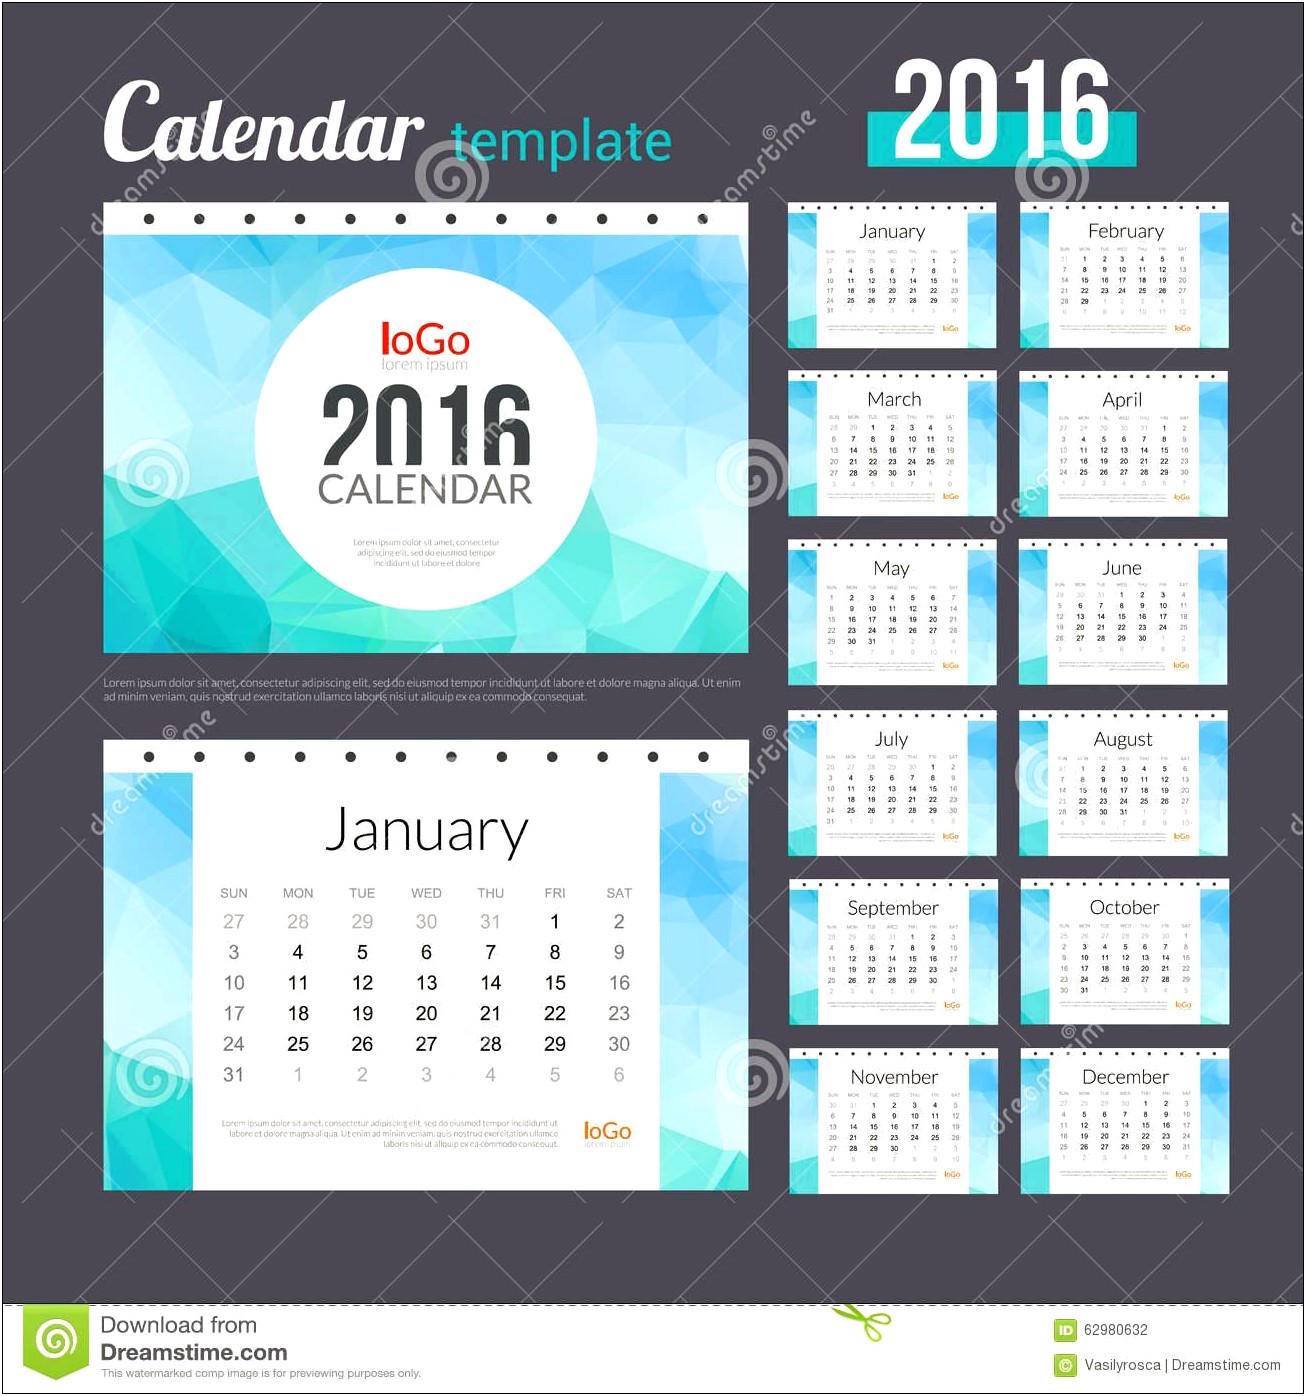 2016 Desk Calendar Template Free Download